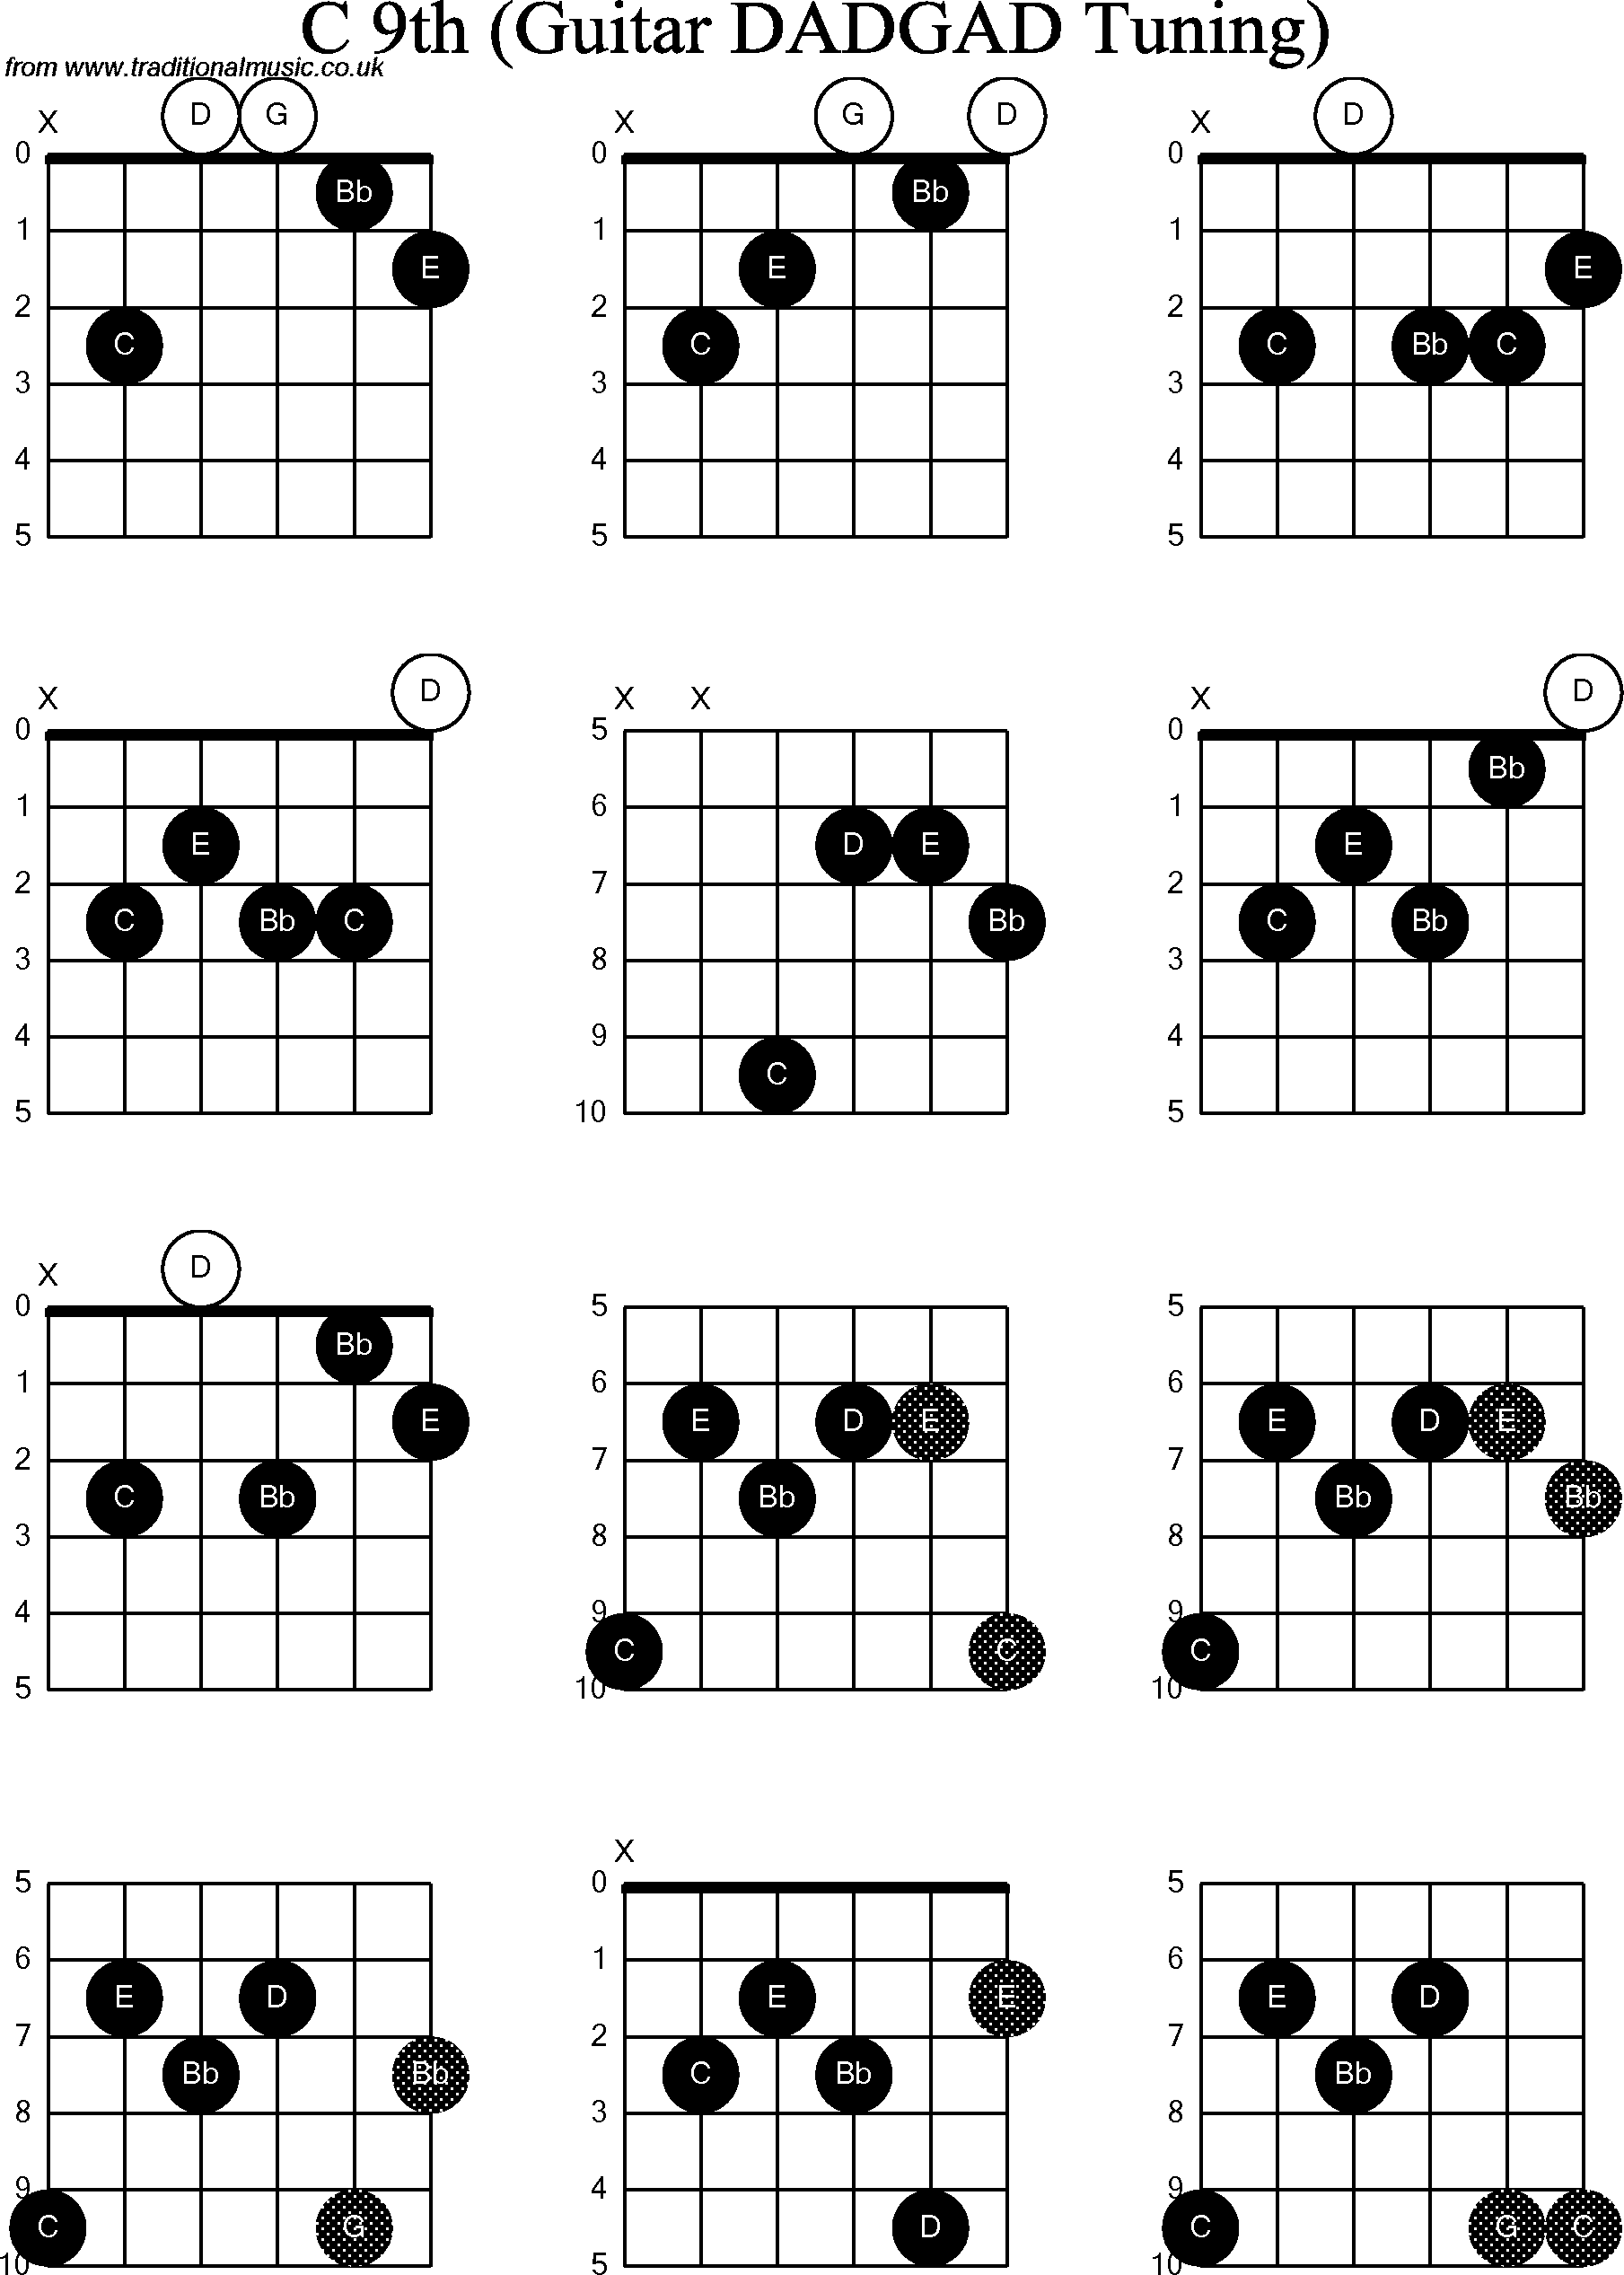 Chord Diagrams for D Modal Guitar(DADGAD), C9th